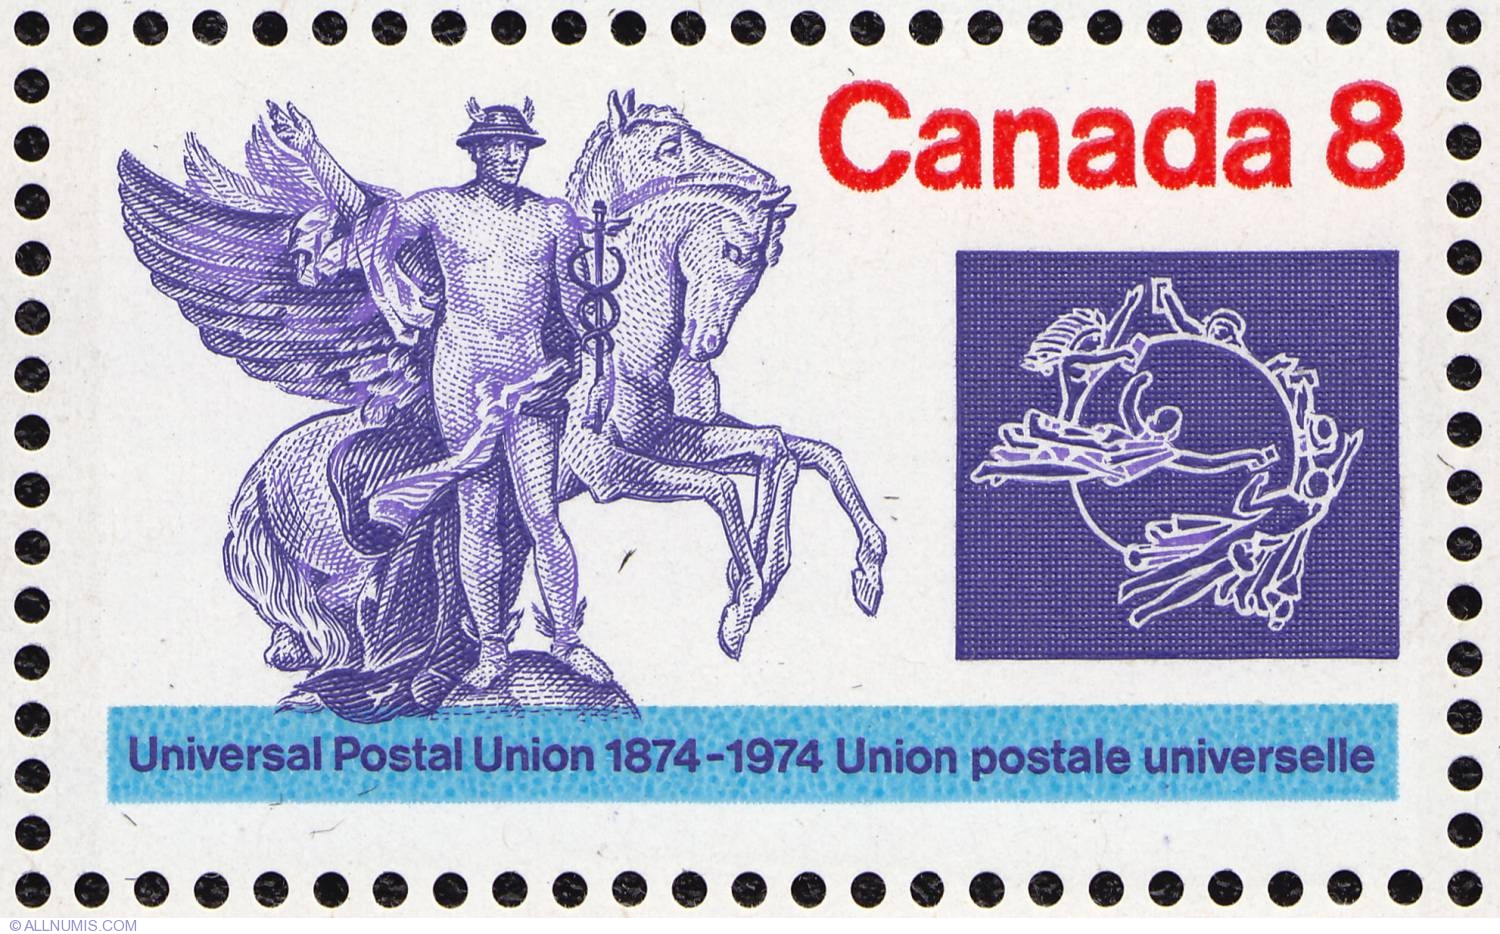 The Universal Postal Union